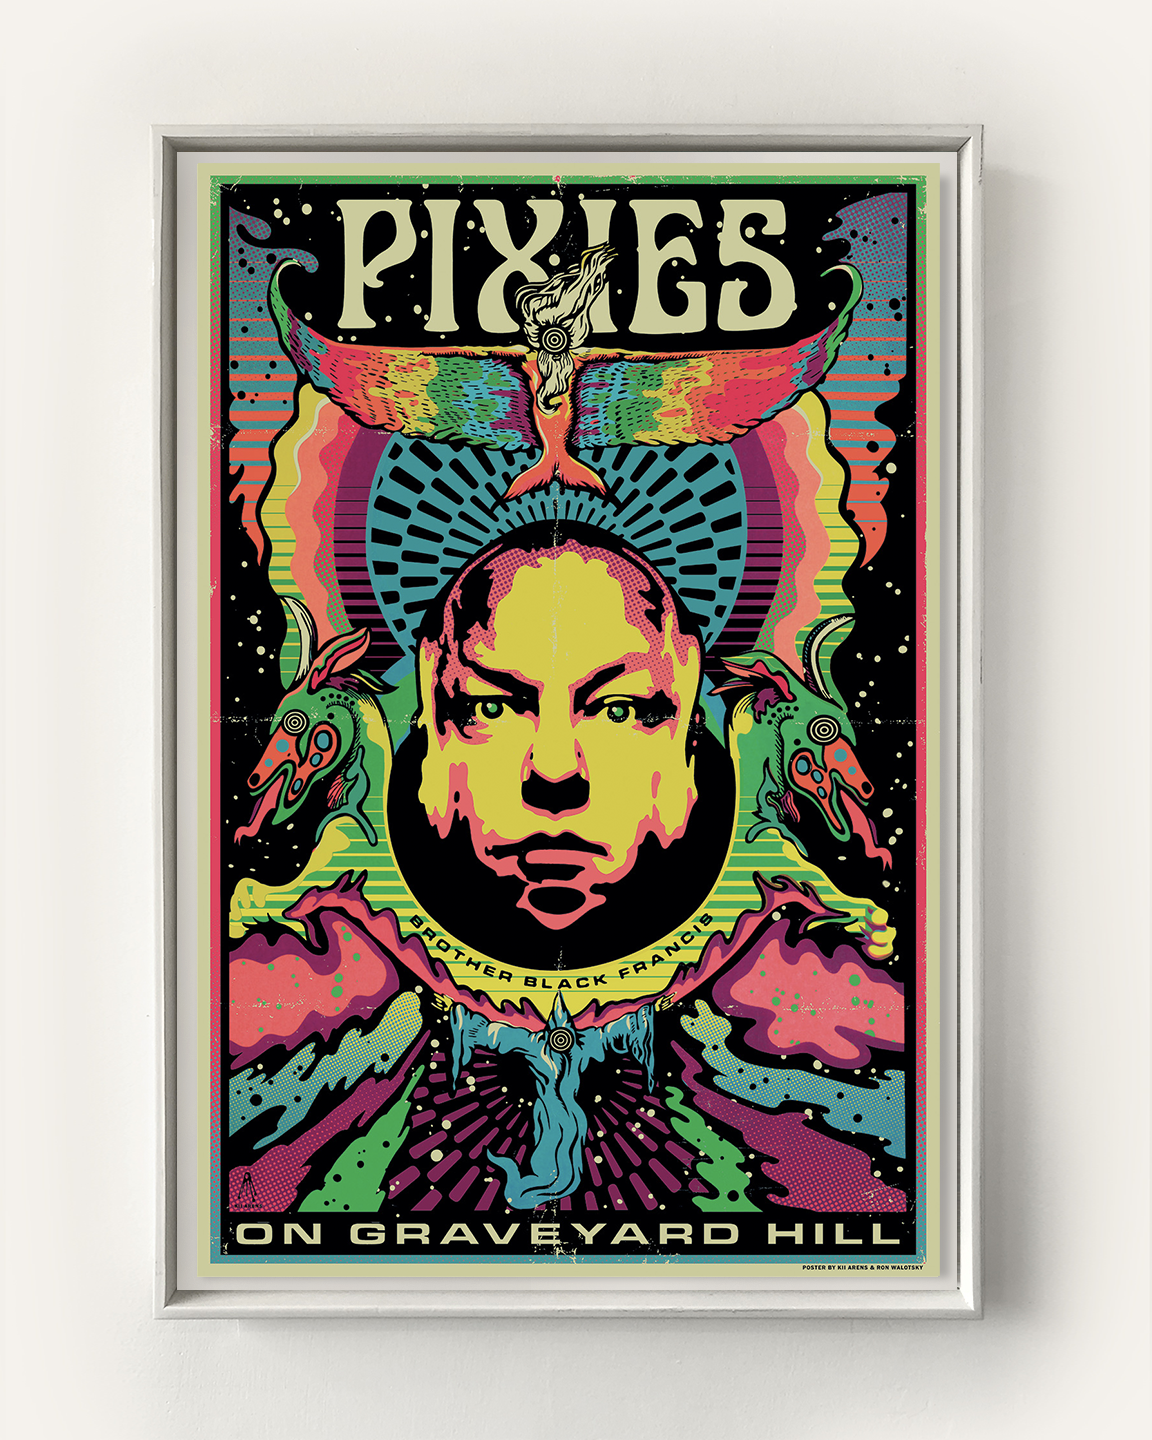 PIXIES - "ON GRAVEYARD HILL"